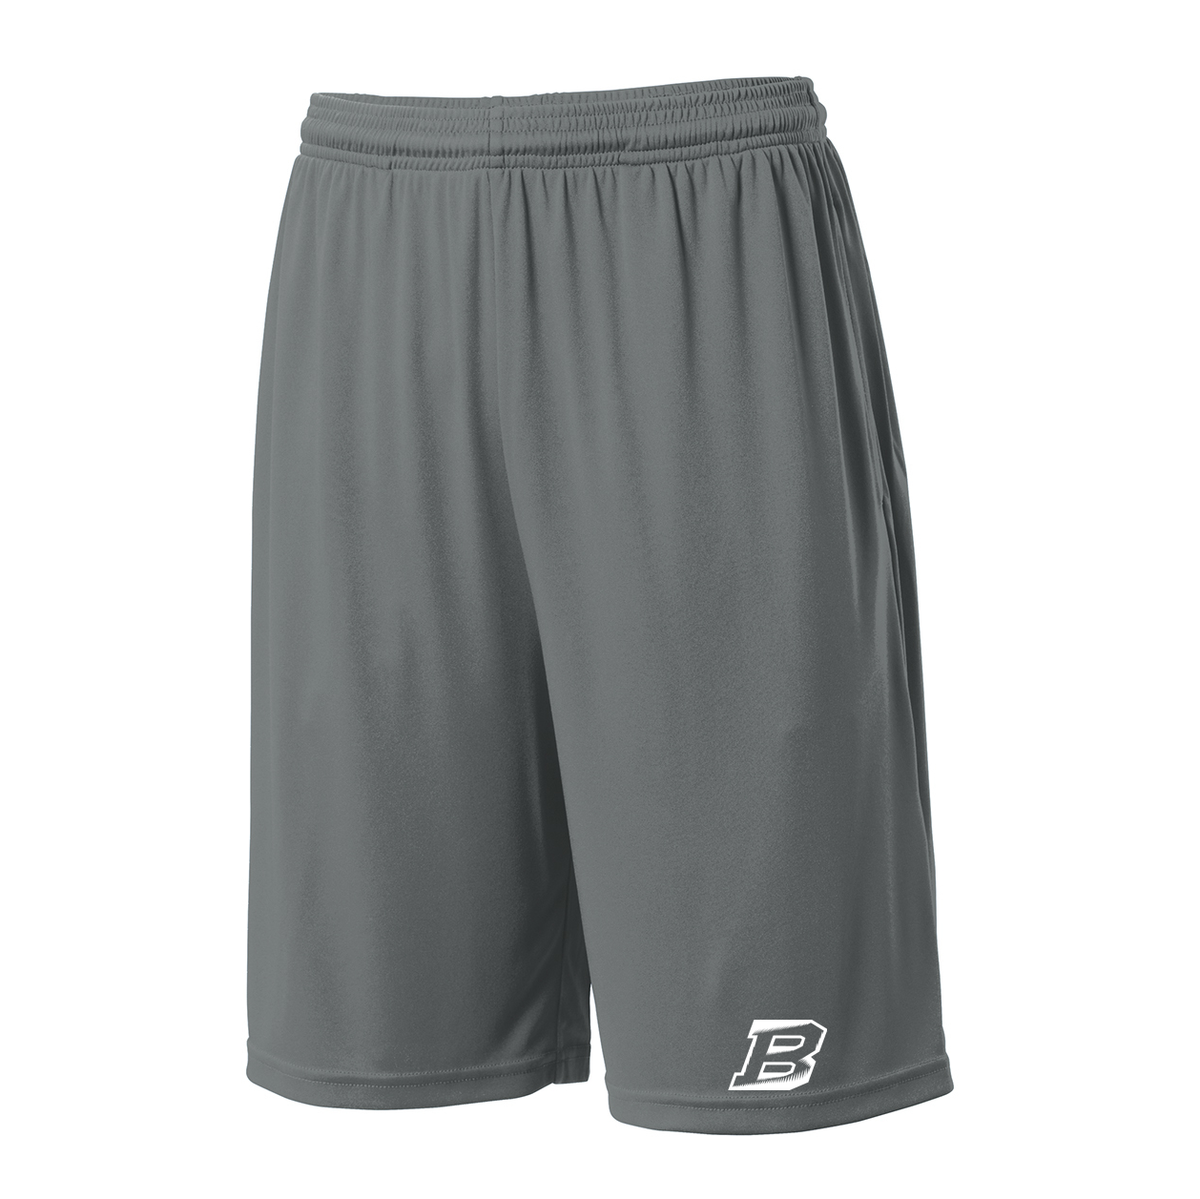 Sunset Bison Softball Shorts